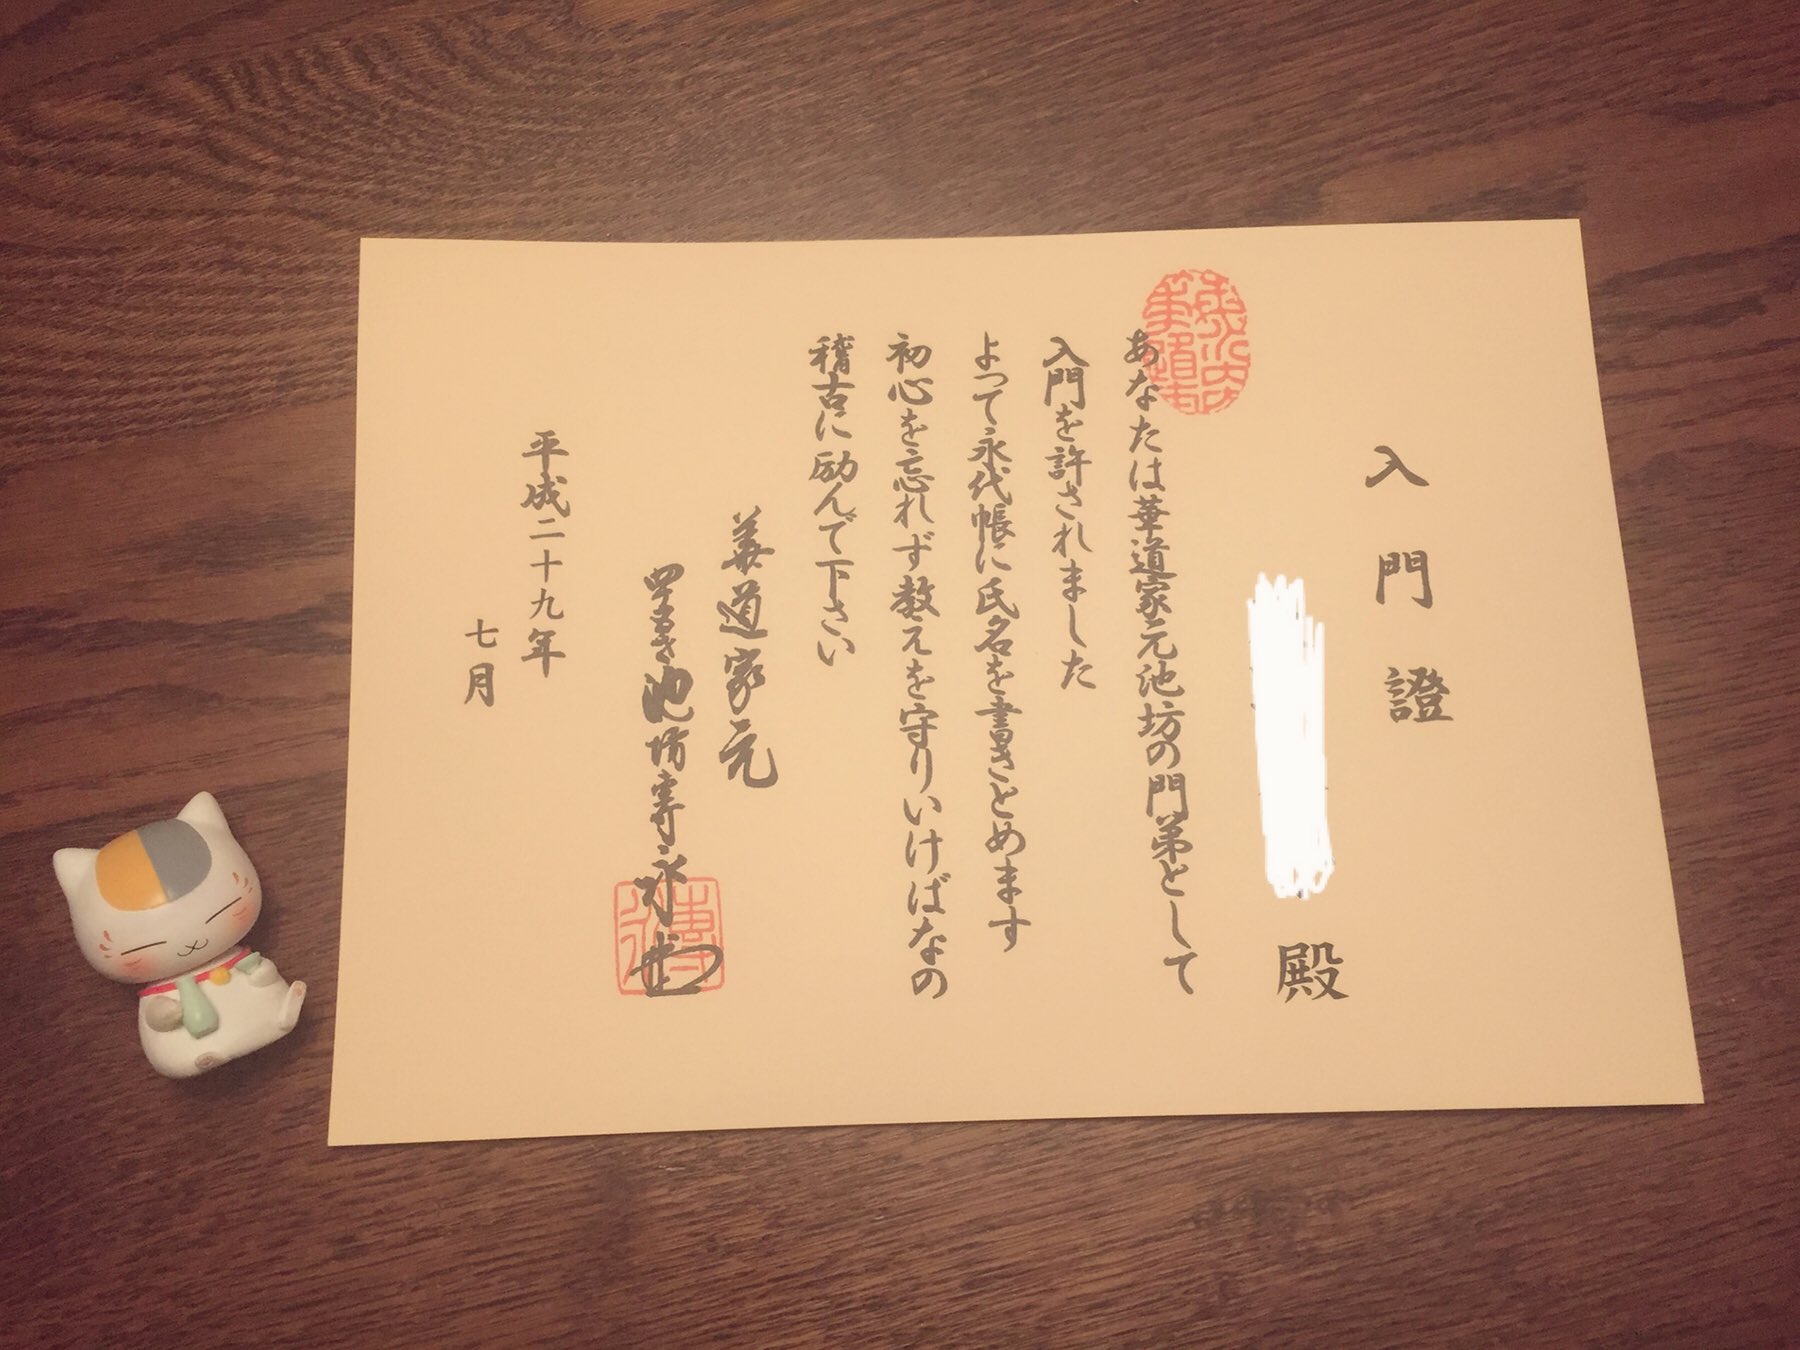 Uryu Hirano 平野雨龍 華道で最初のお免状を頂きました これで茶道も華道もお免状持ち 免許皆伝に向けて精進します T Co Wzbumgnfqh Twitter